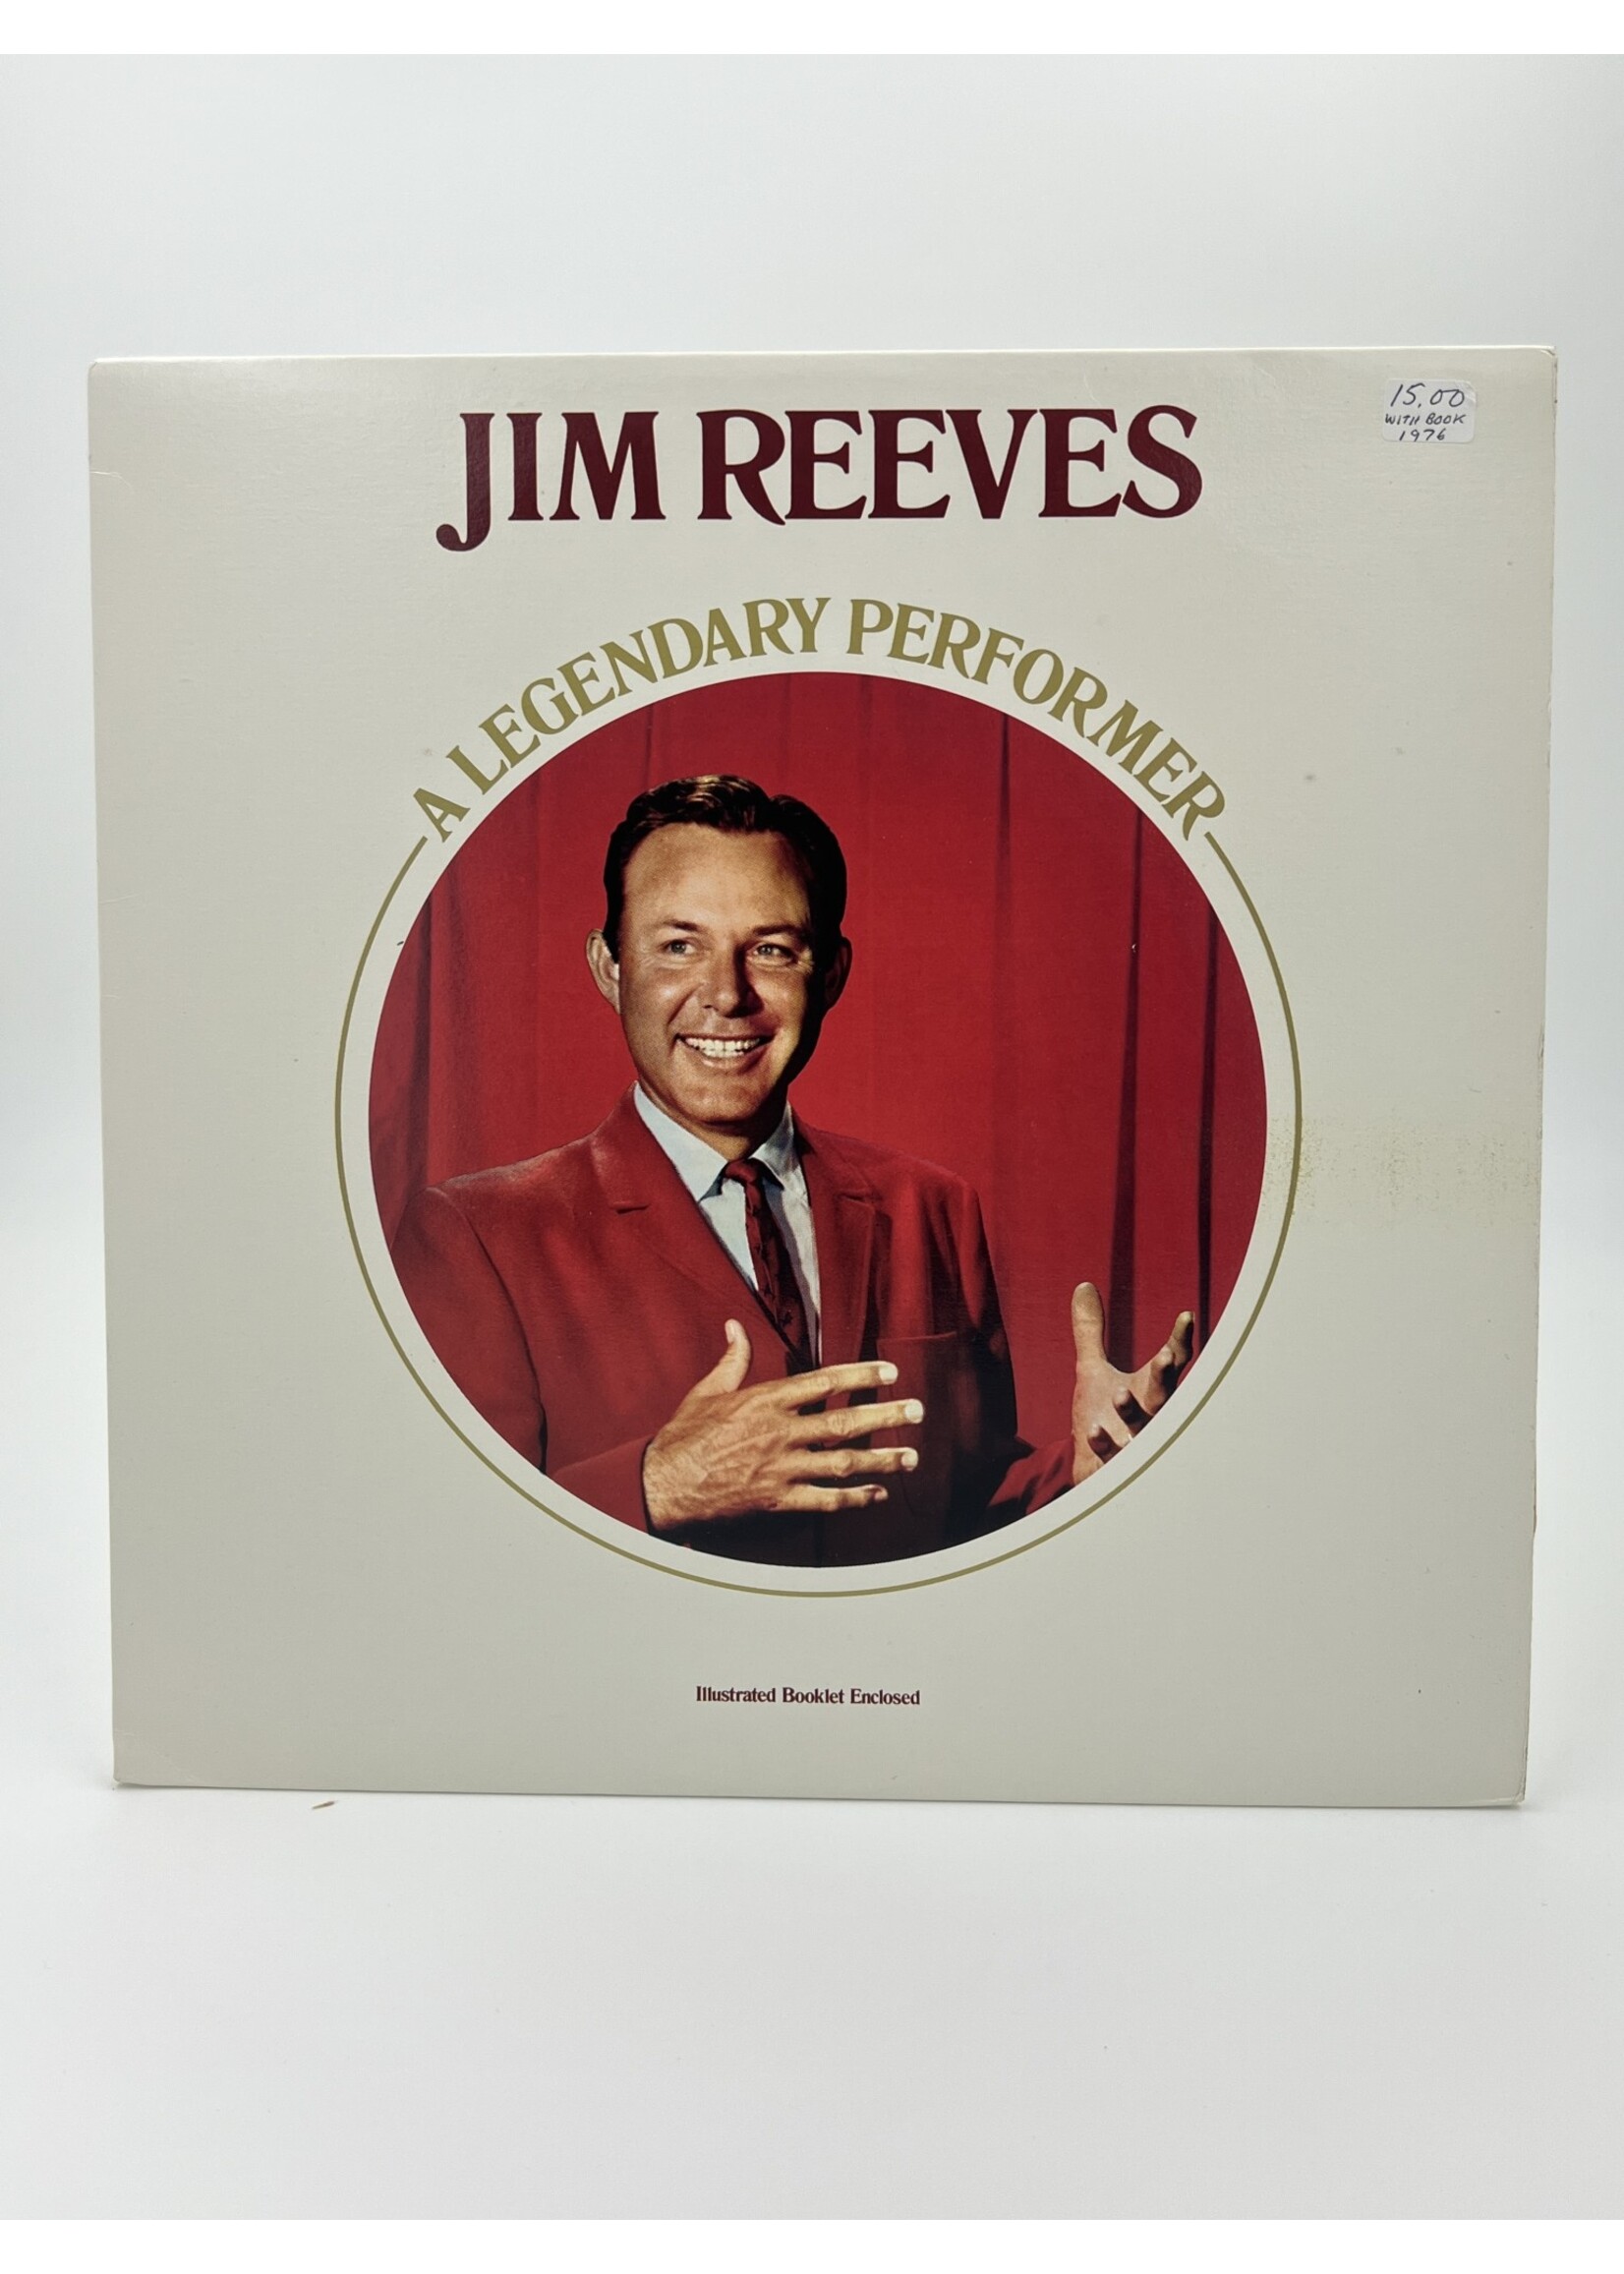 LP Jim Reeves A Legendary Performer LP Record